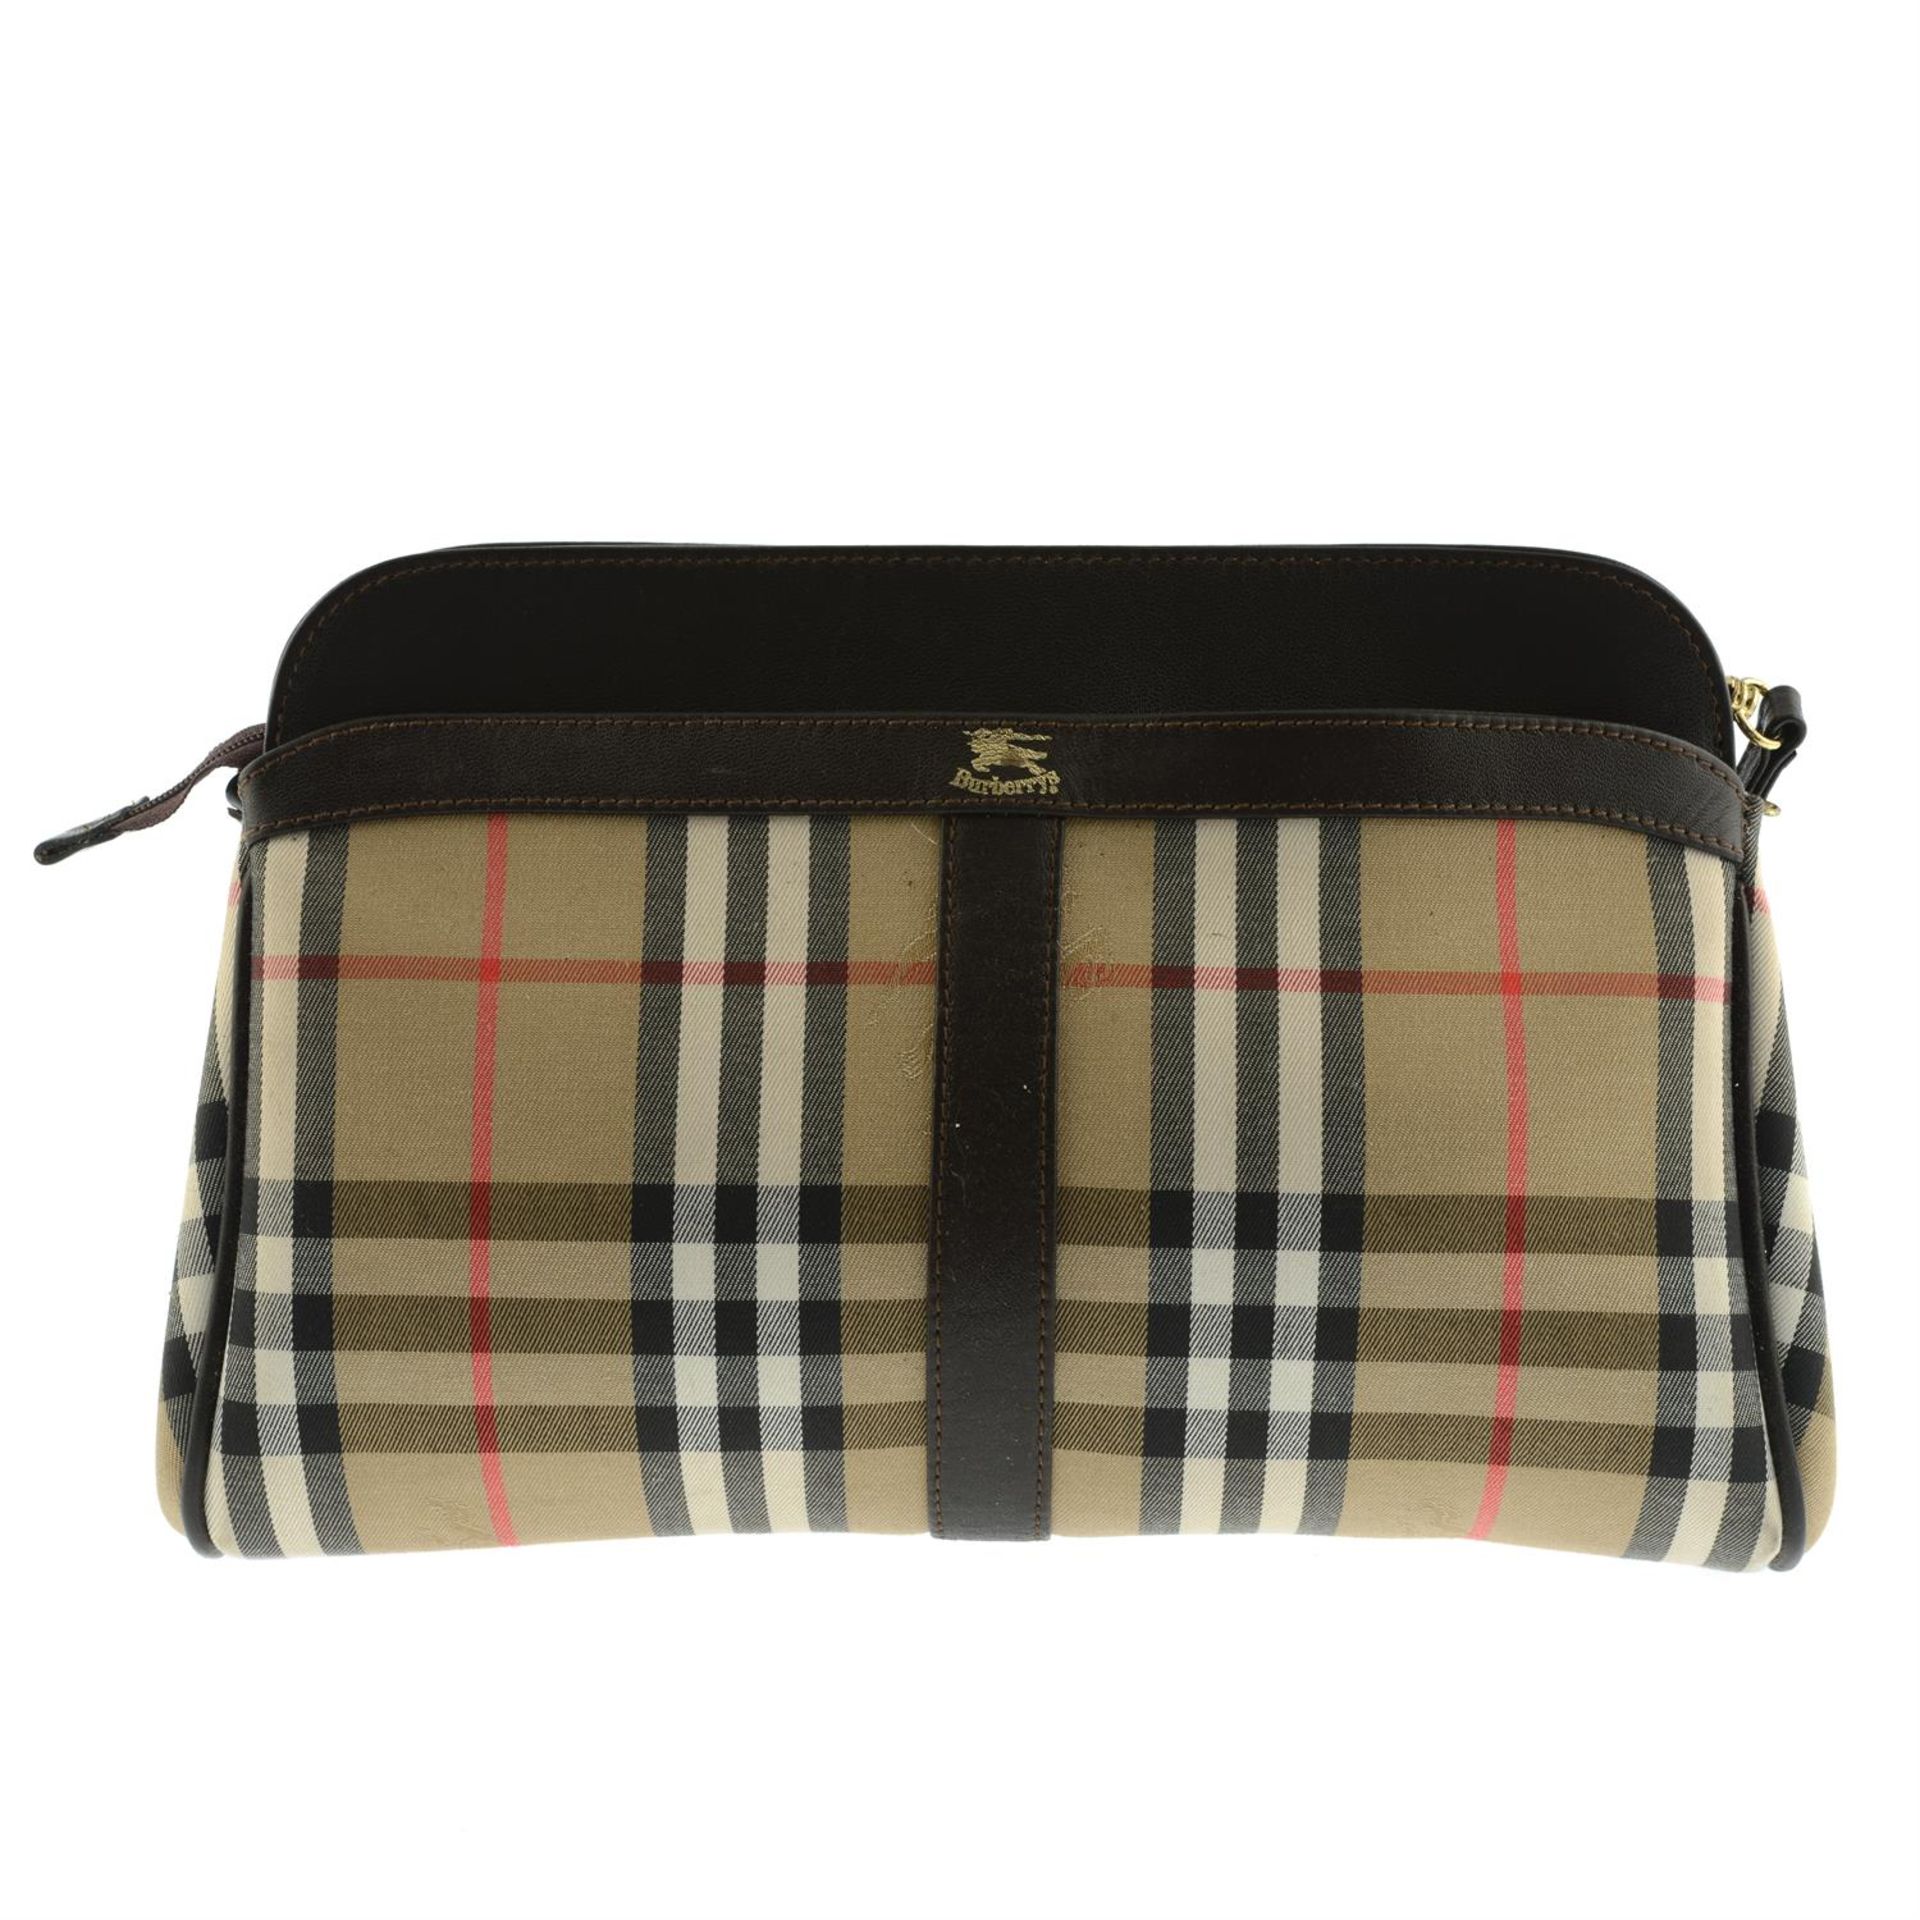 BURBERRY - a Haymarket check canvas handbag.